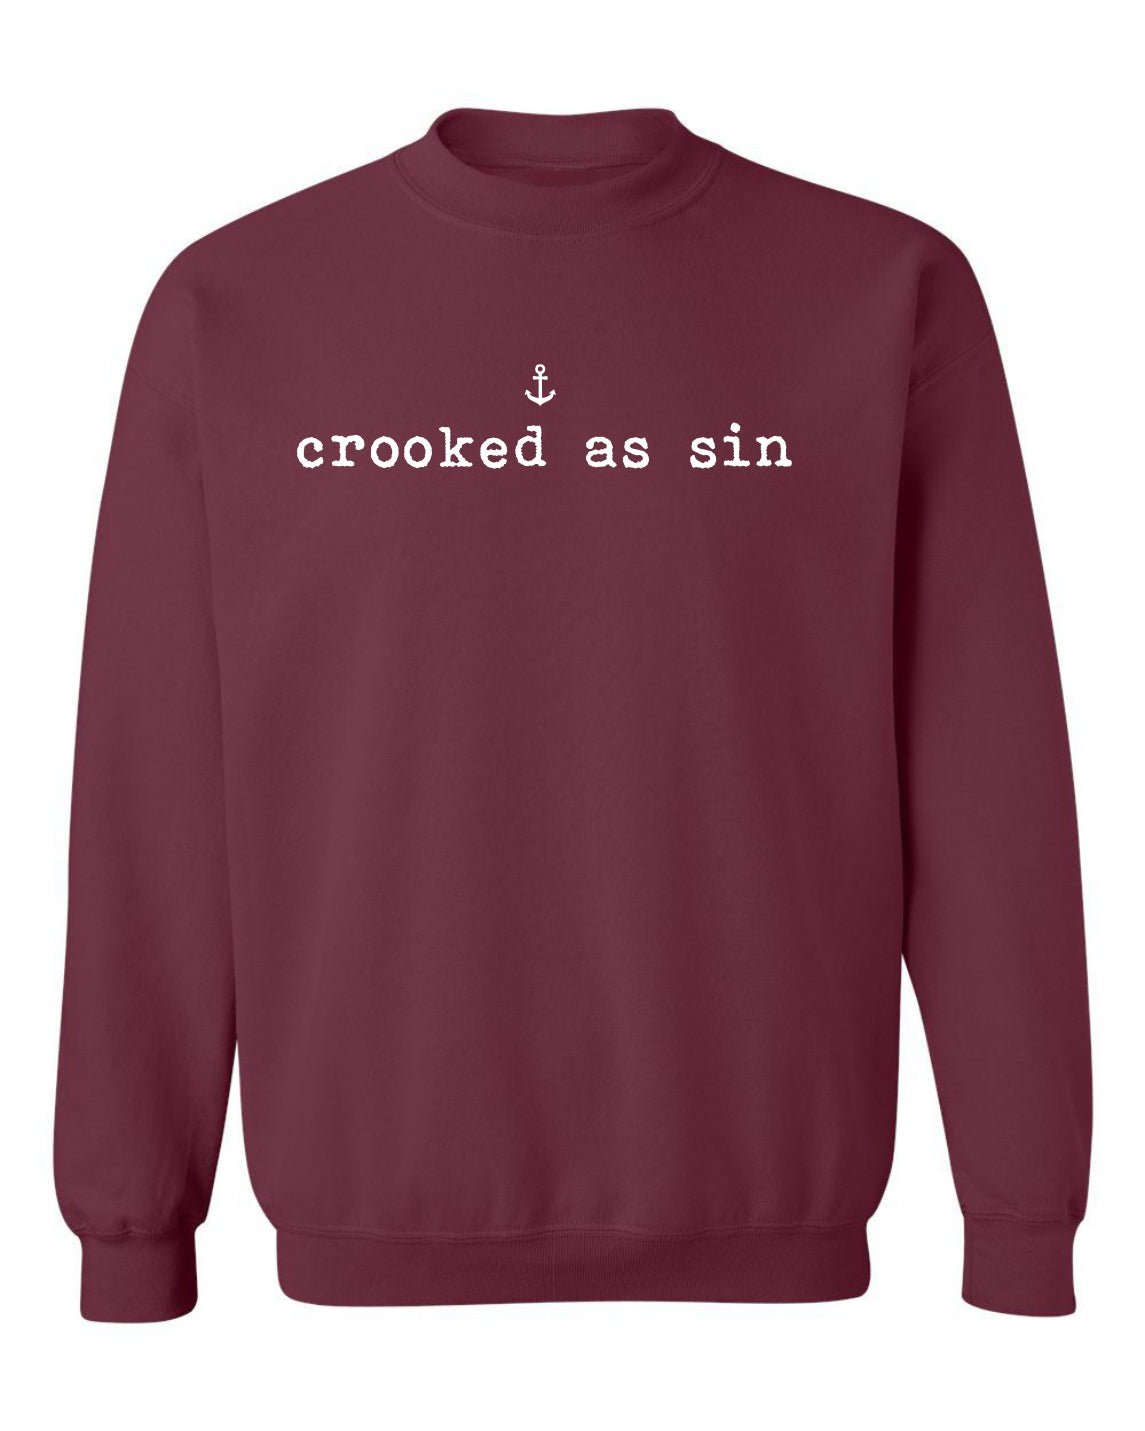 "Crooked As Sin" Unisex Crewneck Sweatshirt